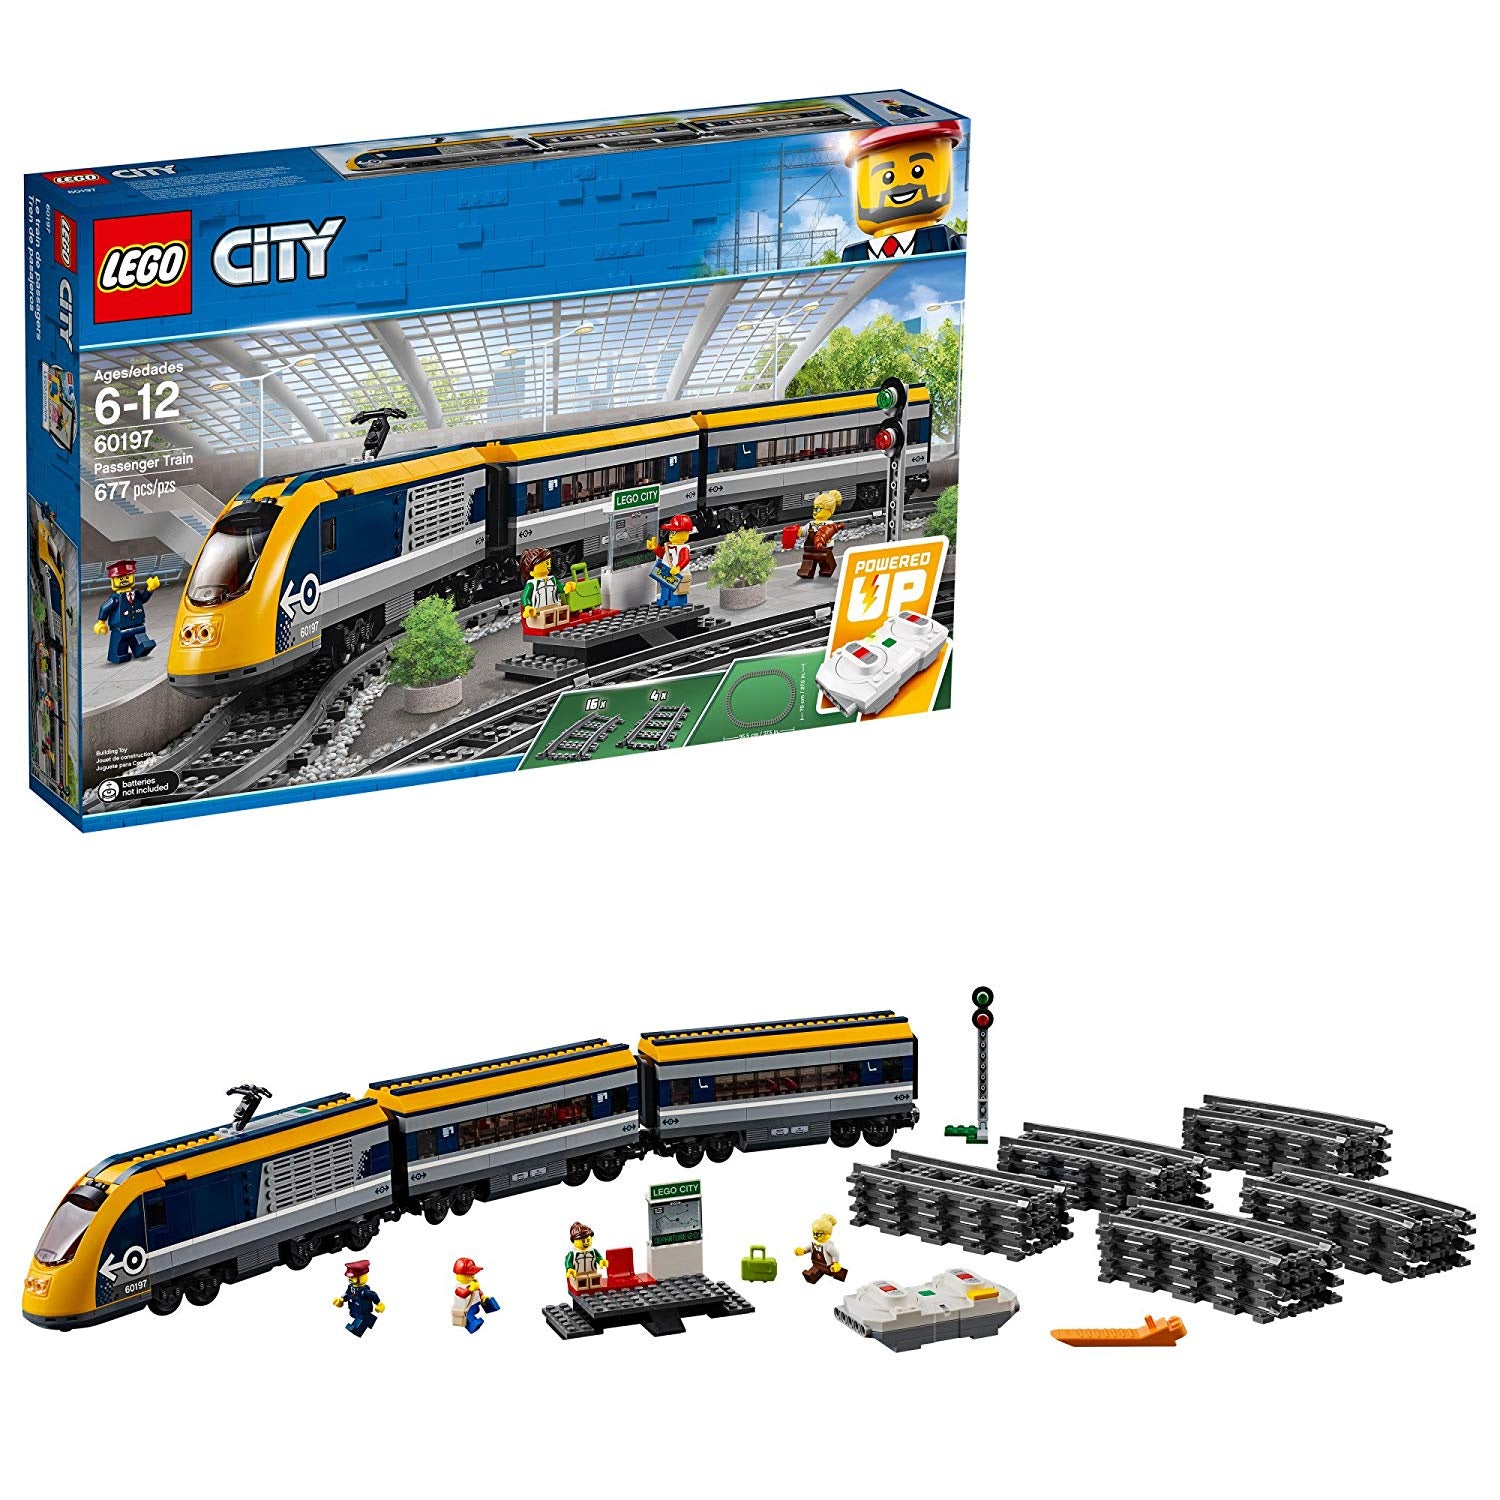 Lego City: Passenger Train 60197